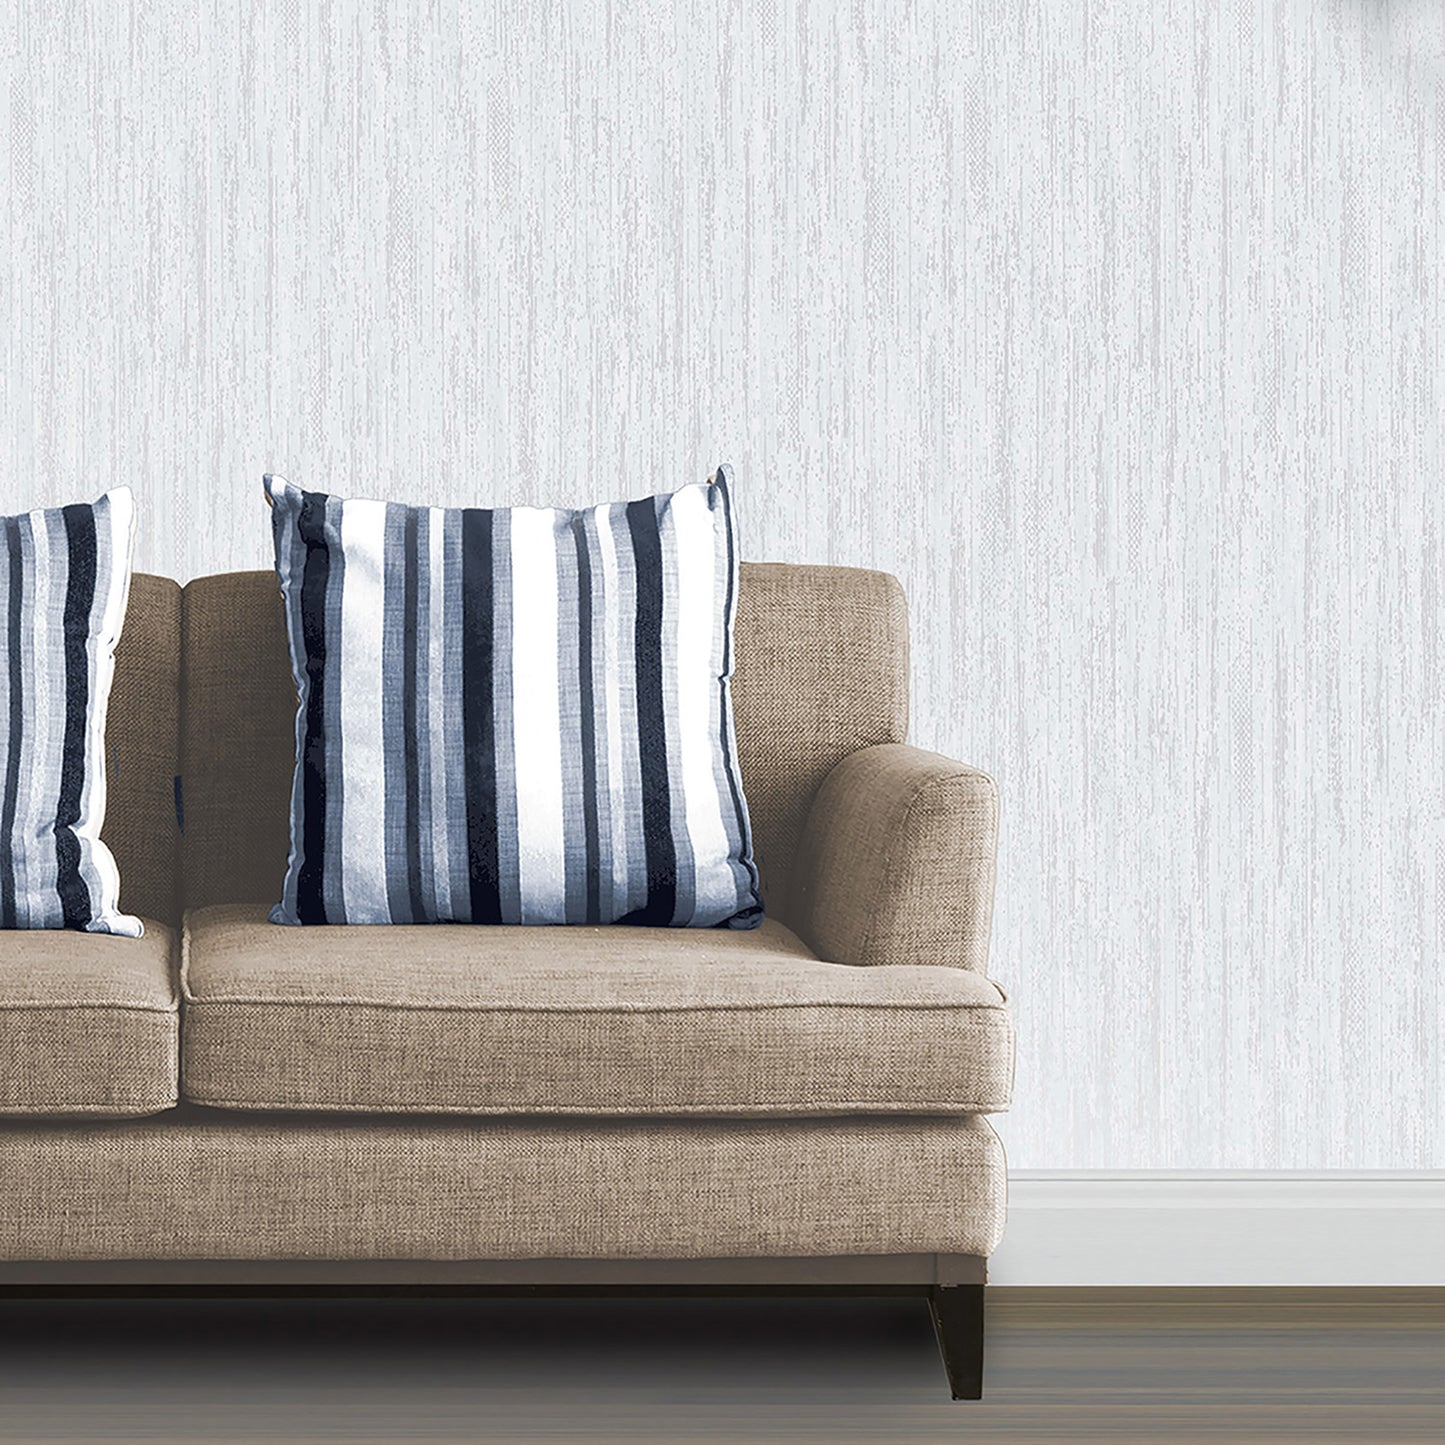 Acquire 2814-m0736 bath whites off whites textured wallpaper advantage Wallpaper